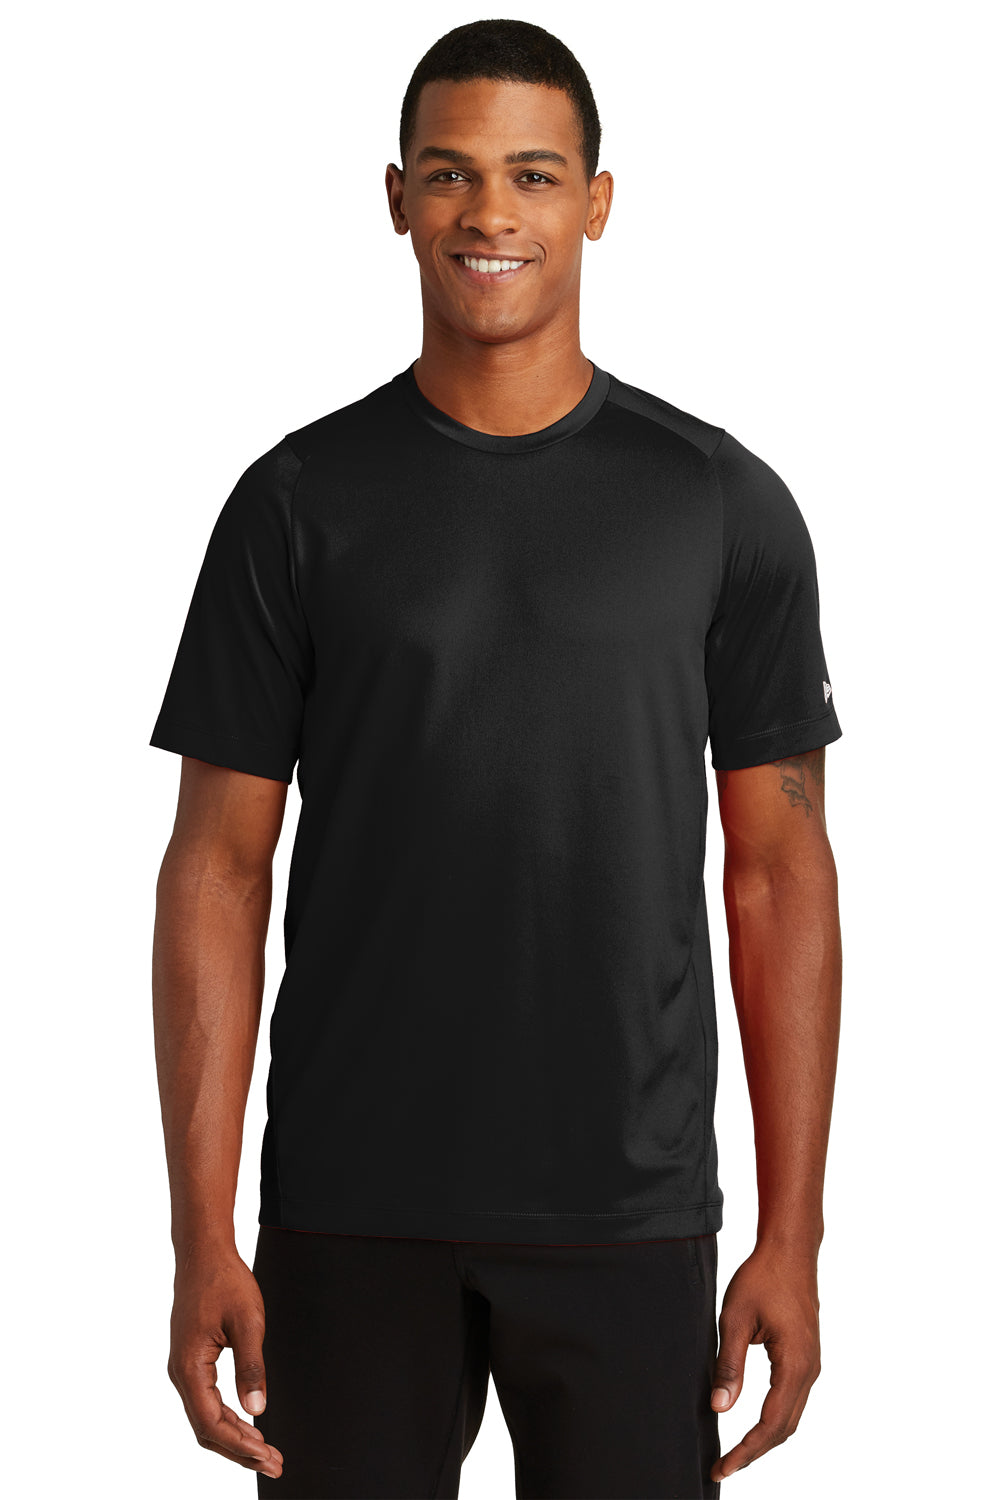 New Era NEA200 Mens Series Performance Jersey Moisture Wicking Short Sleeve Crewneck T-Shirt Black Front